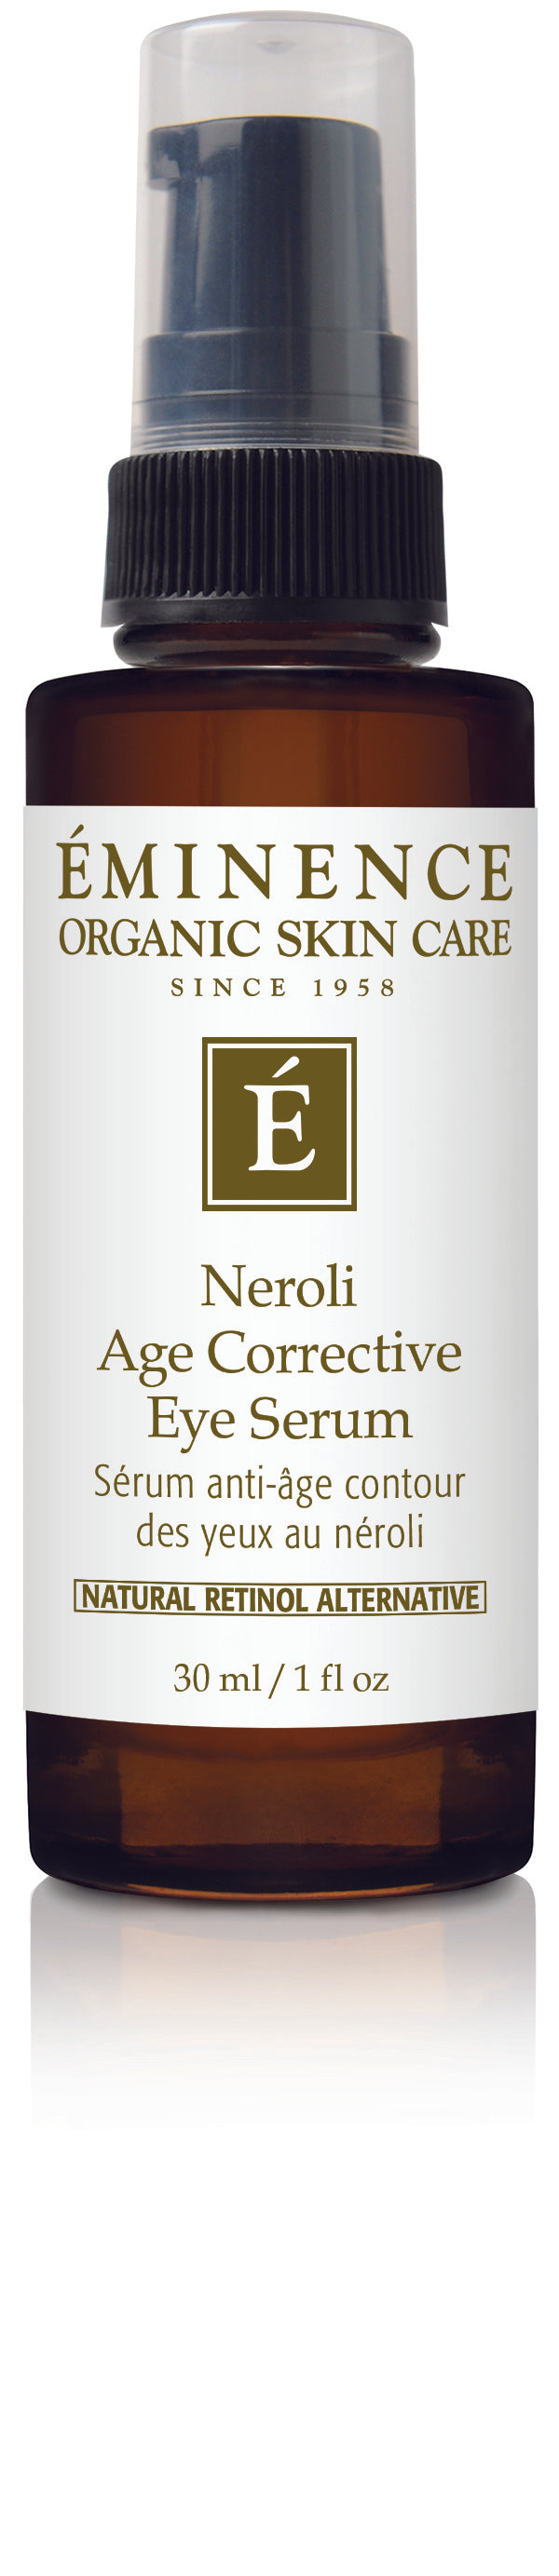 Neroli Age Corrective Eye Serum